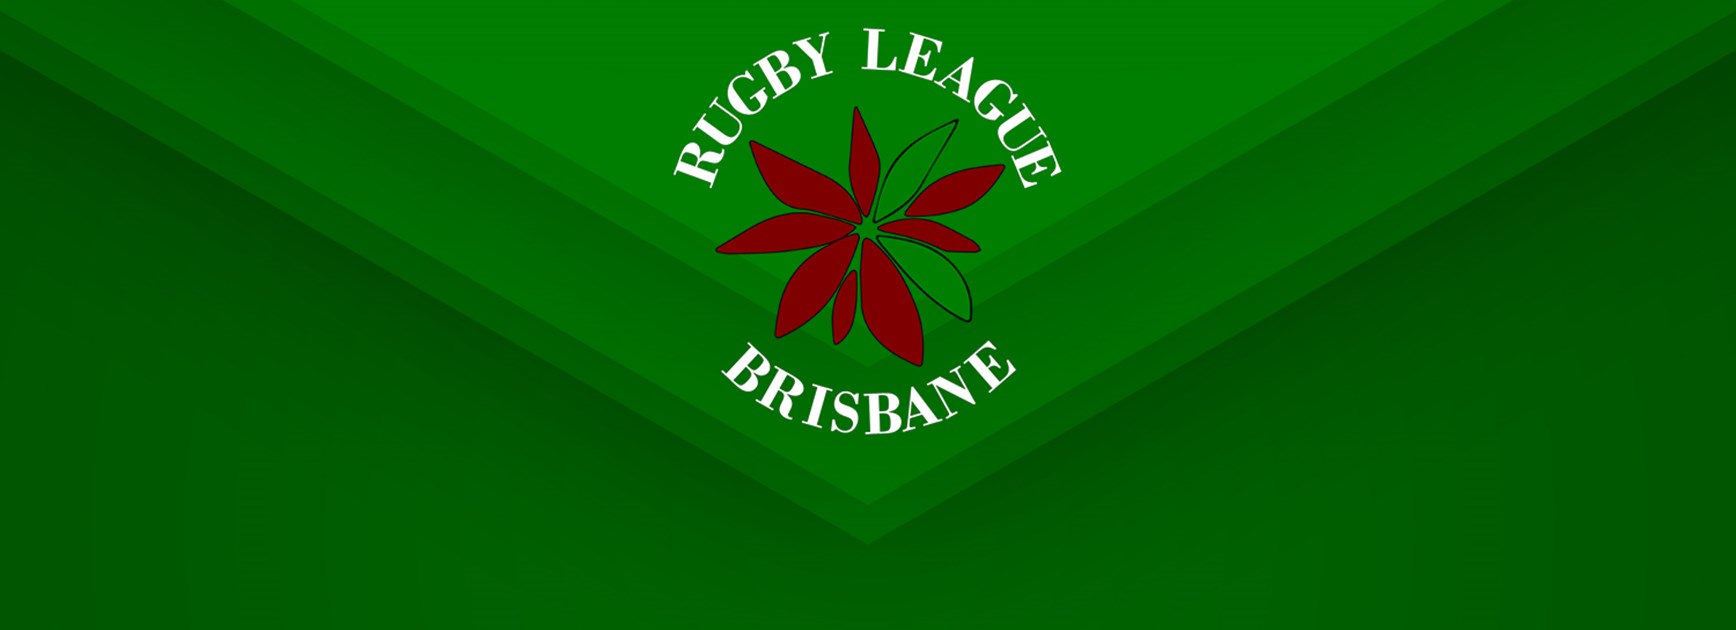 RLB senior draws unveiled